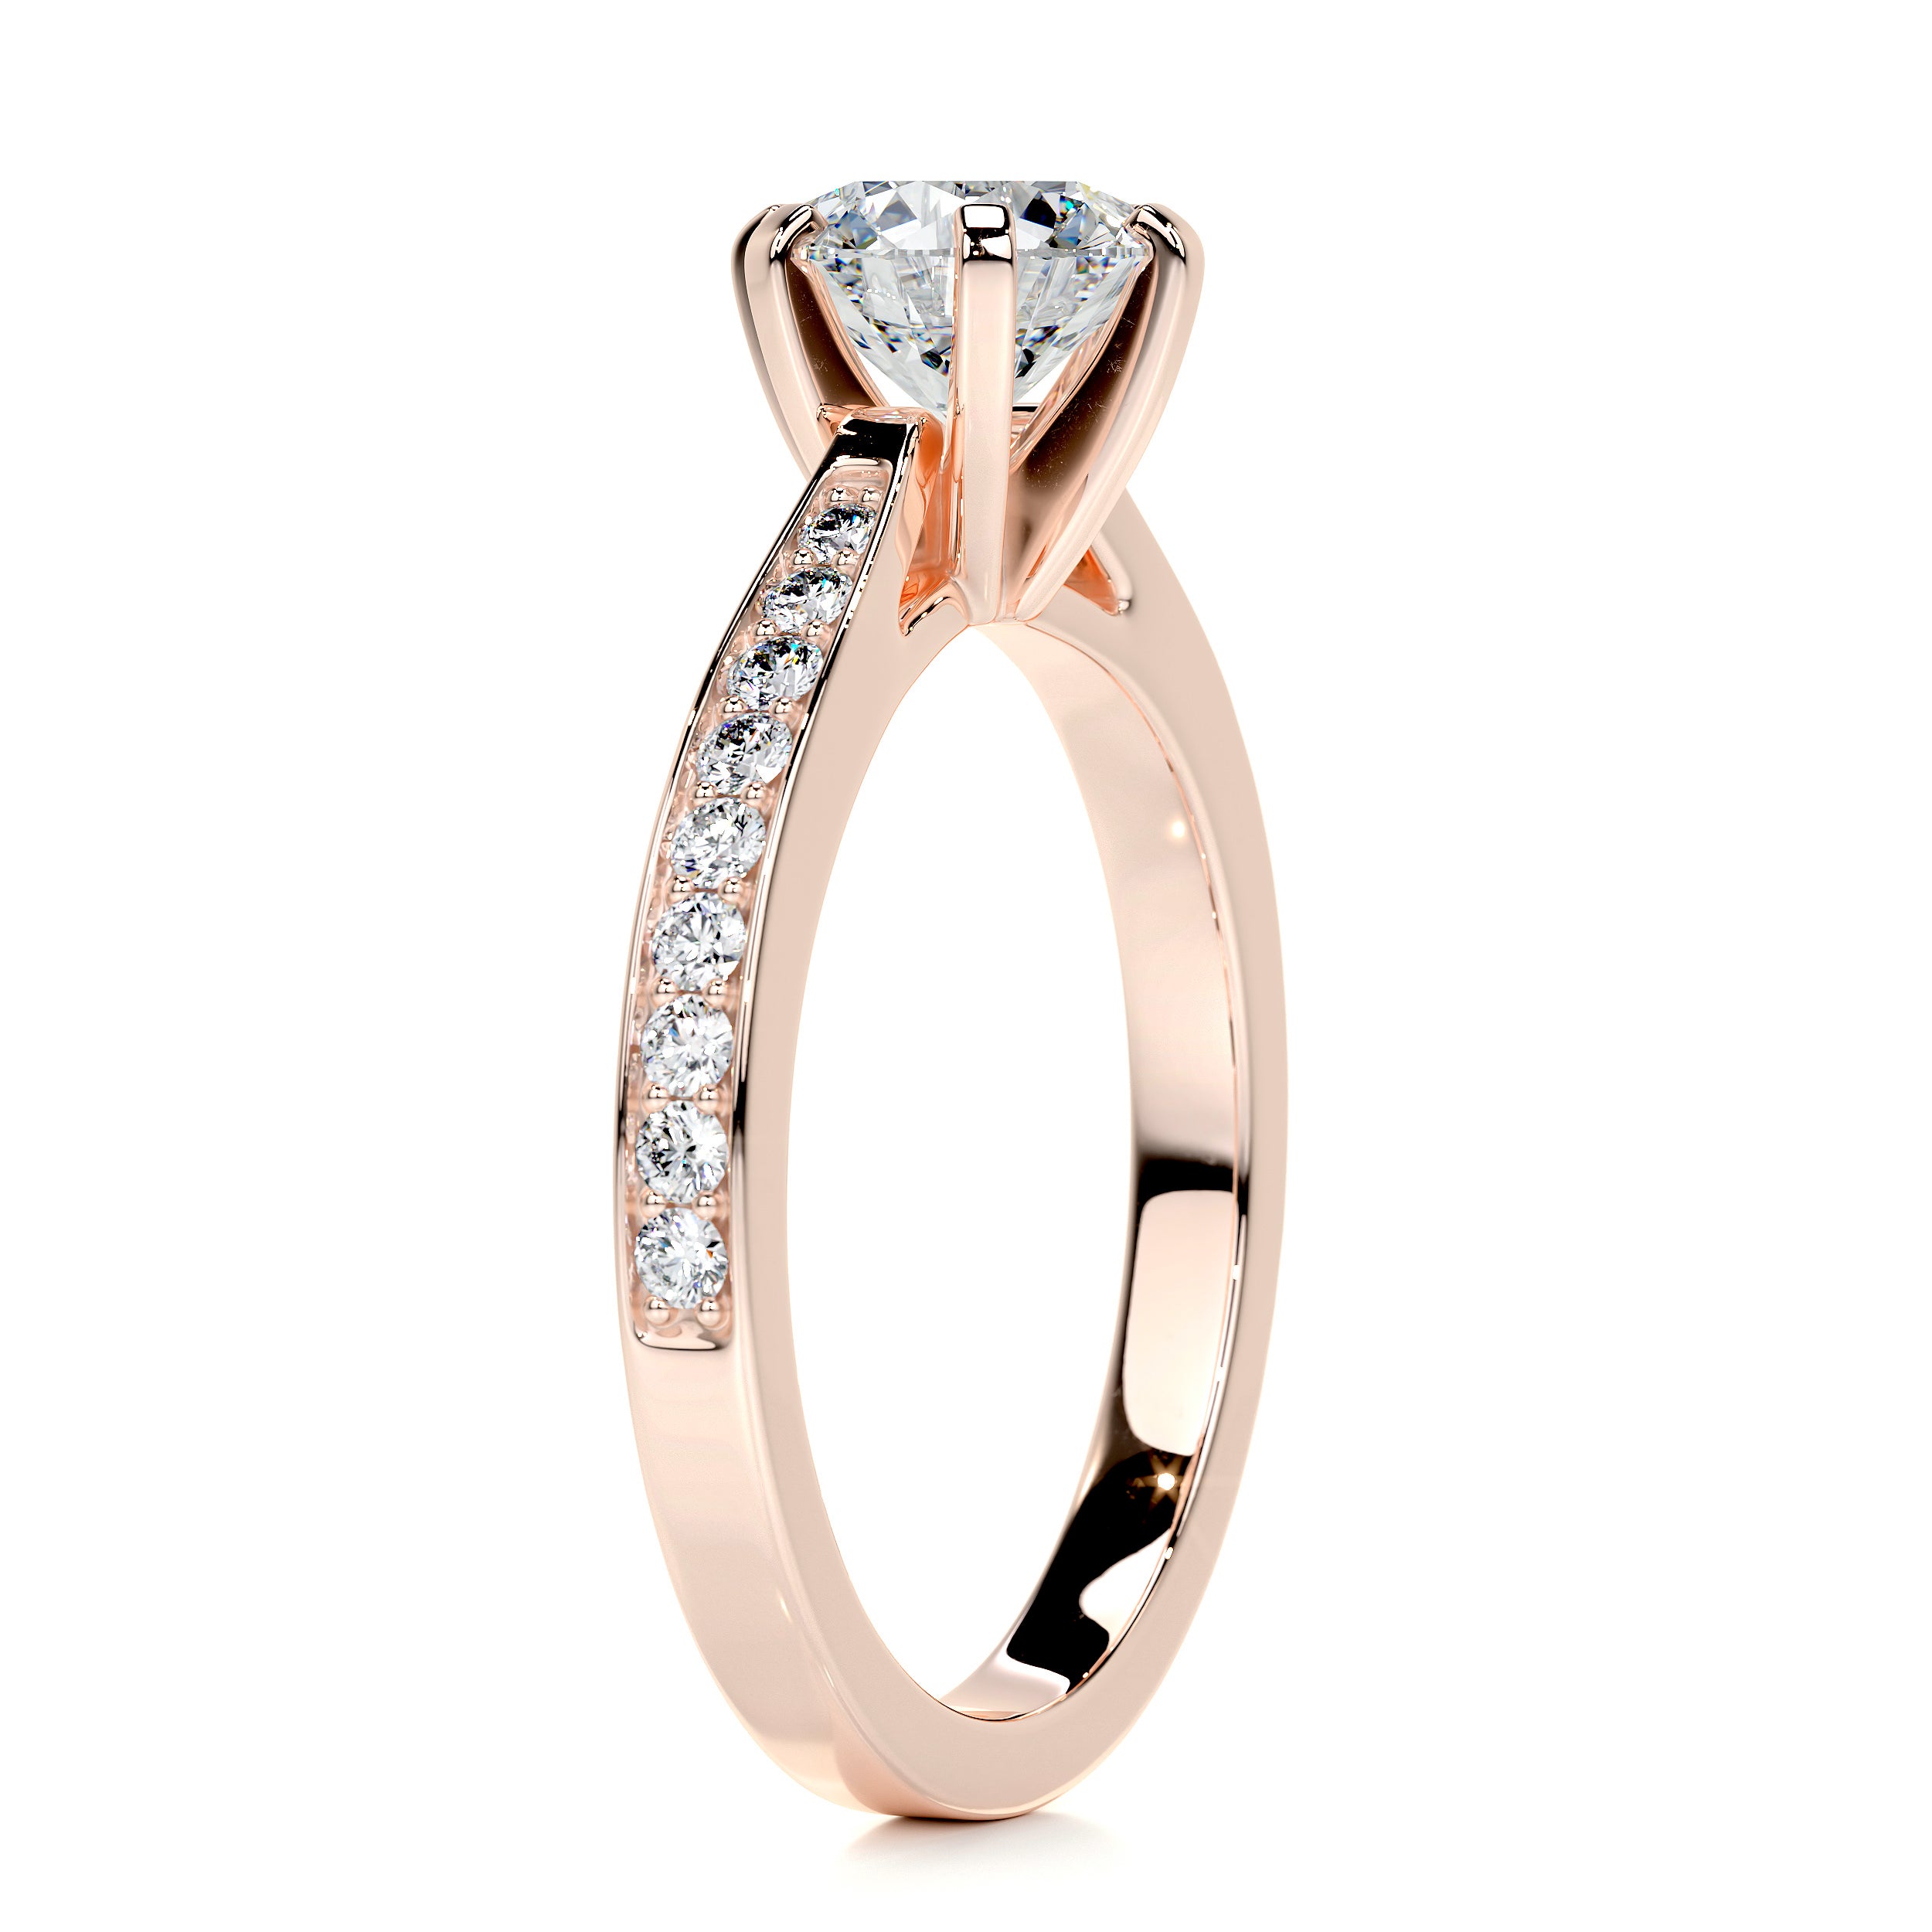 Talia Diamond Engagement Ring   (1.2 Carat) - 14K Rose Gold